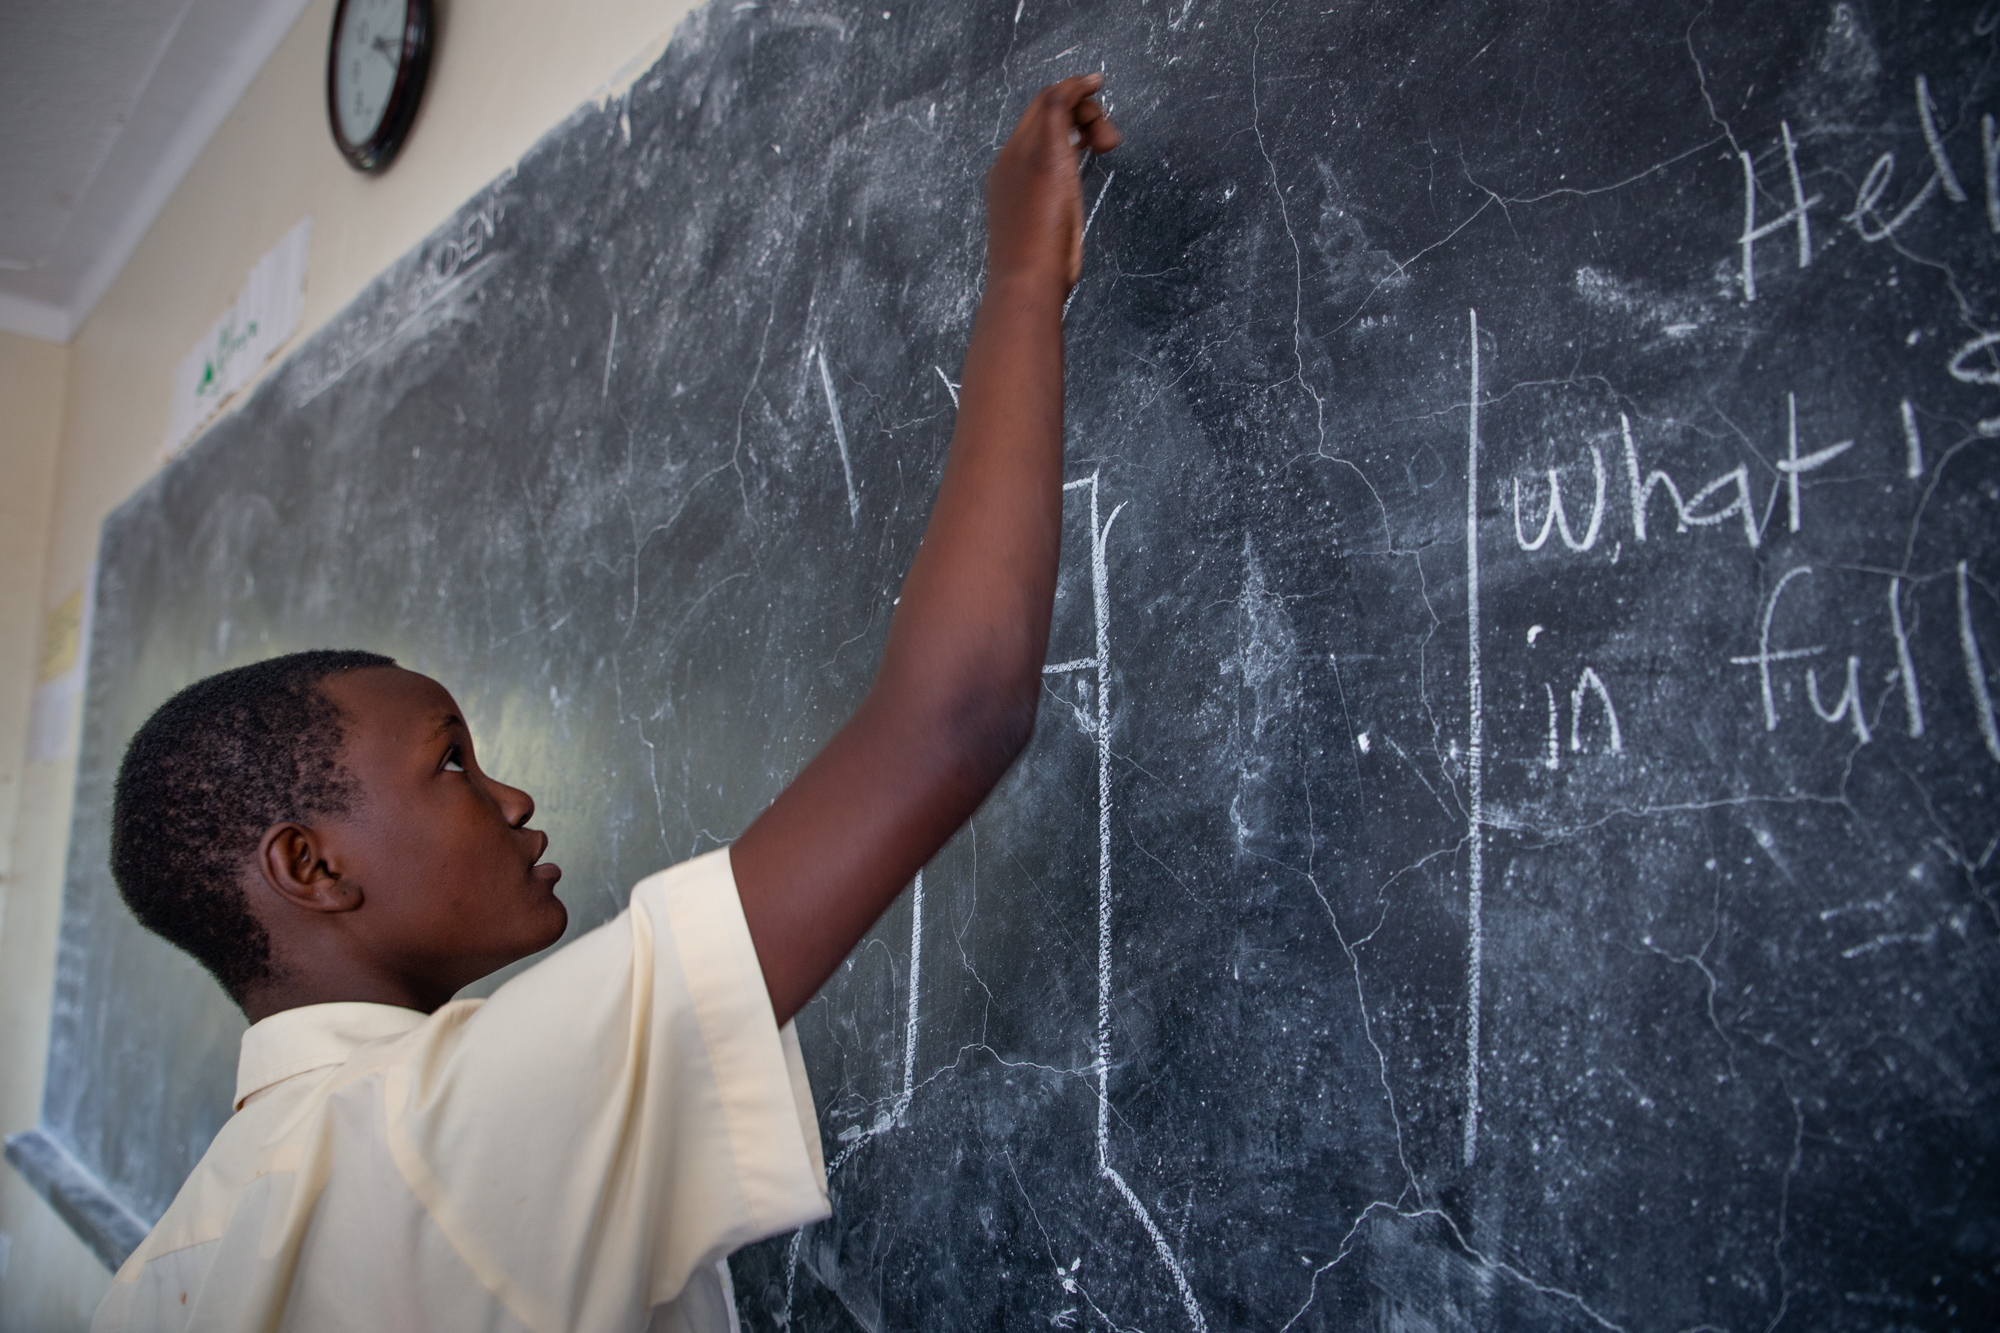 A student writing on a chalkboard in Kenya.